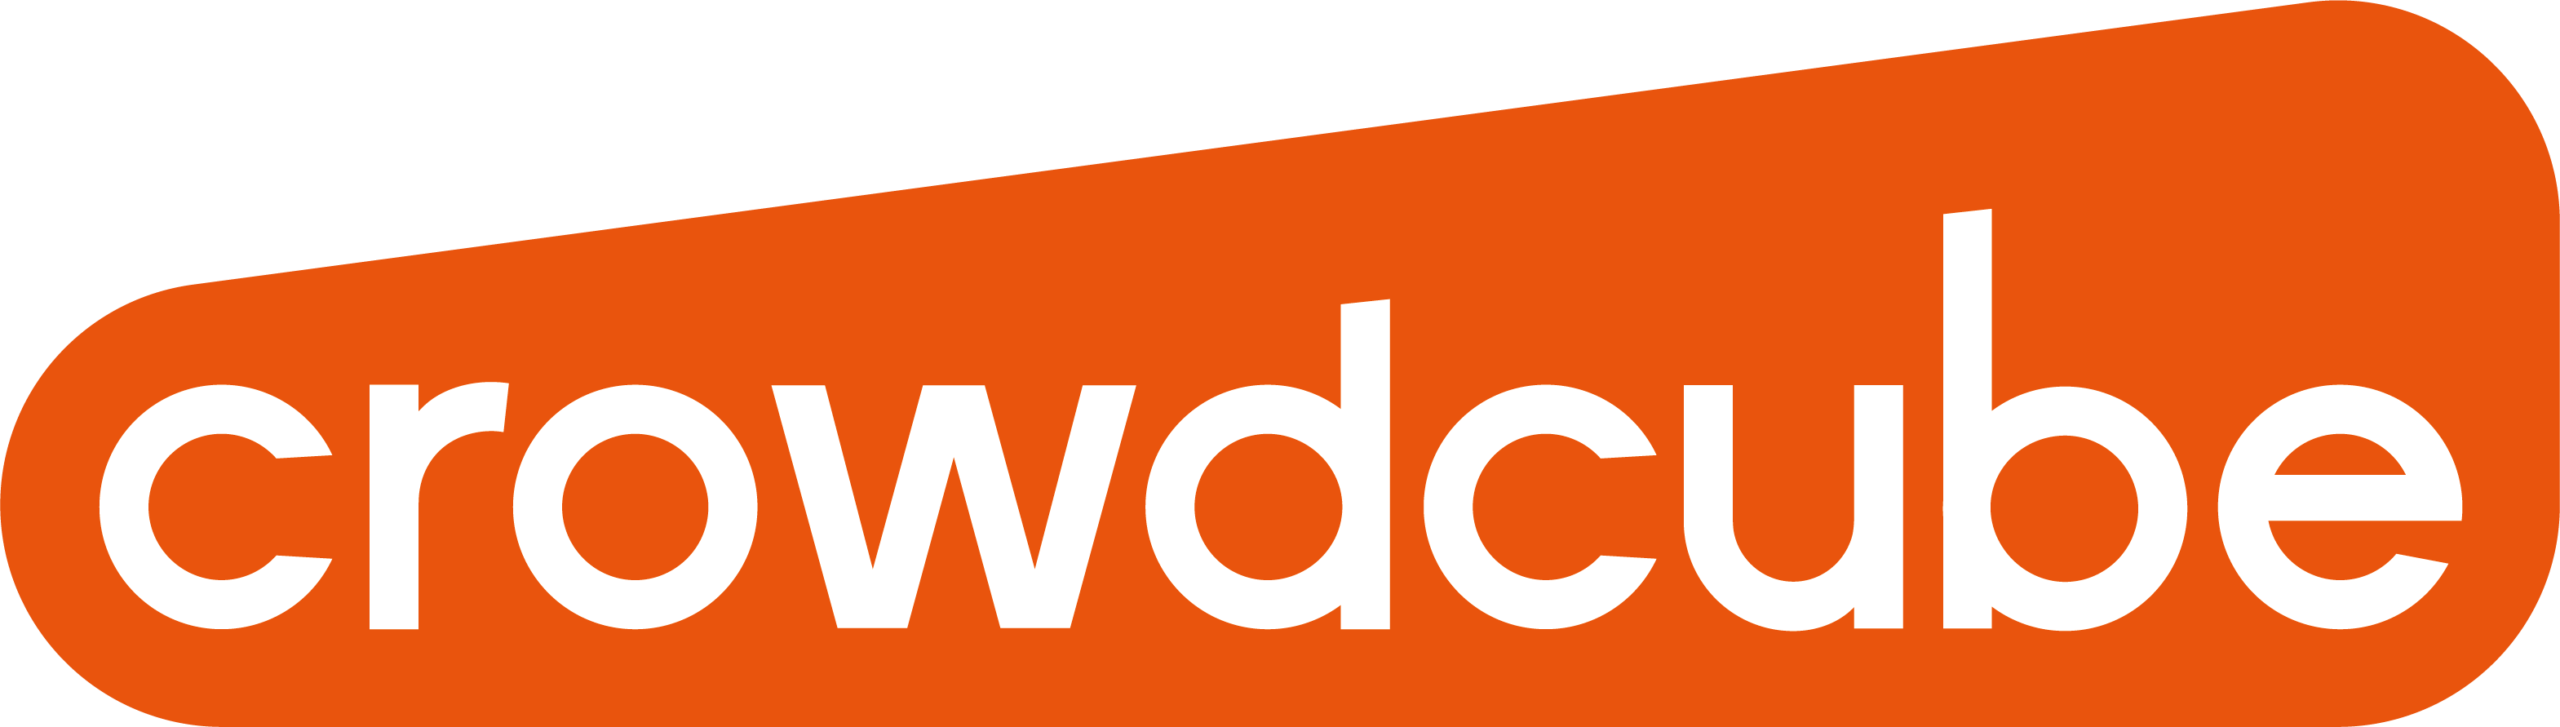 Crowdcube-logo